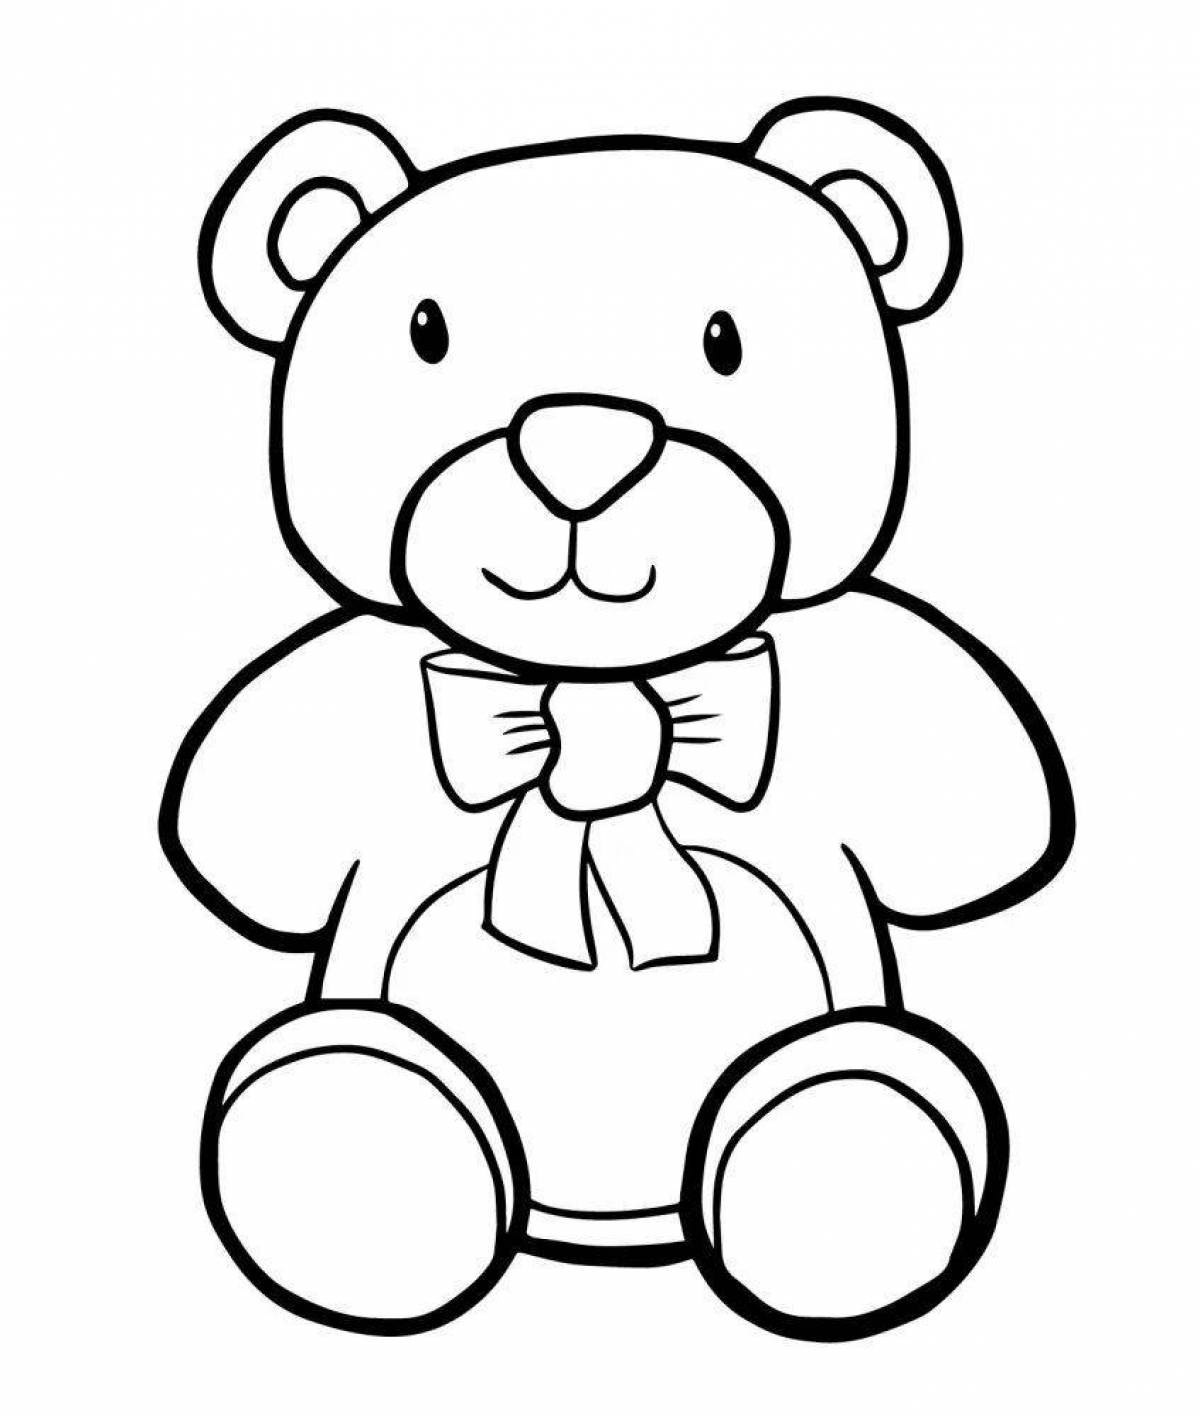 Bear toy #2